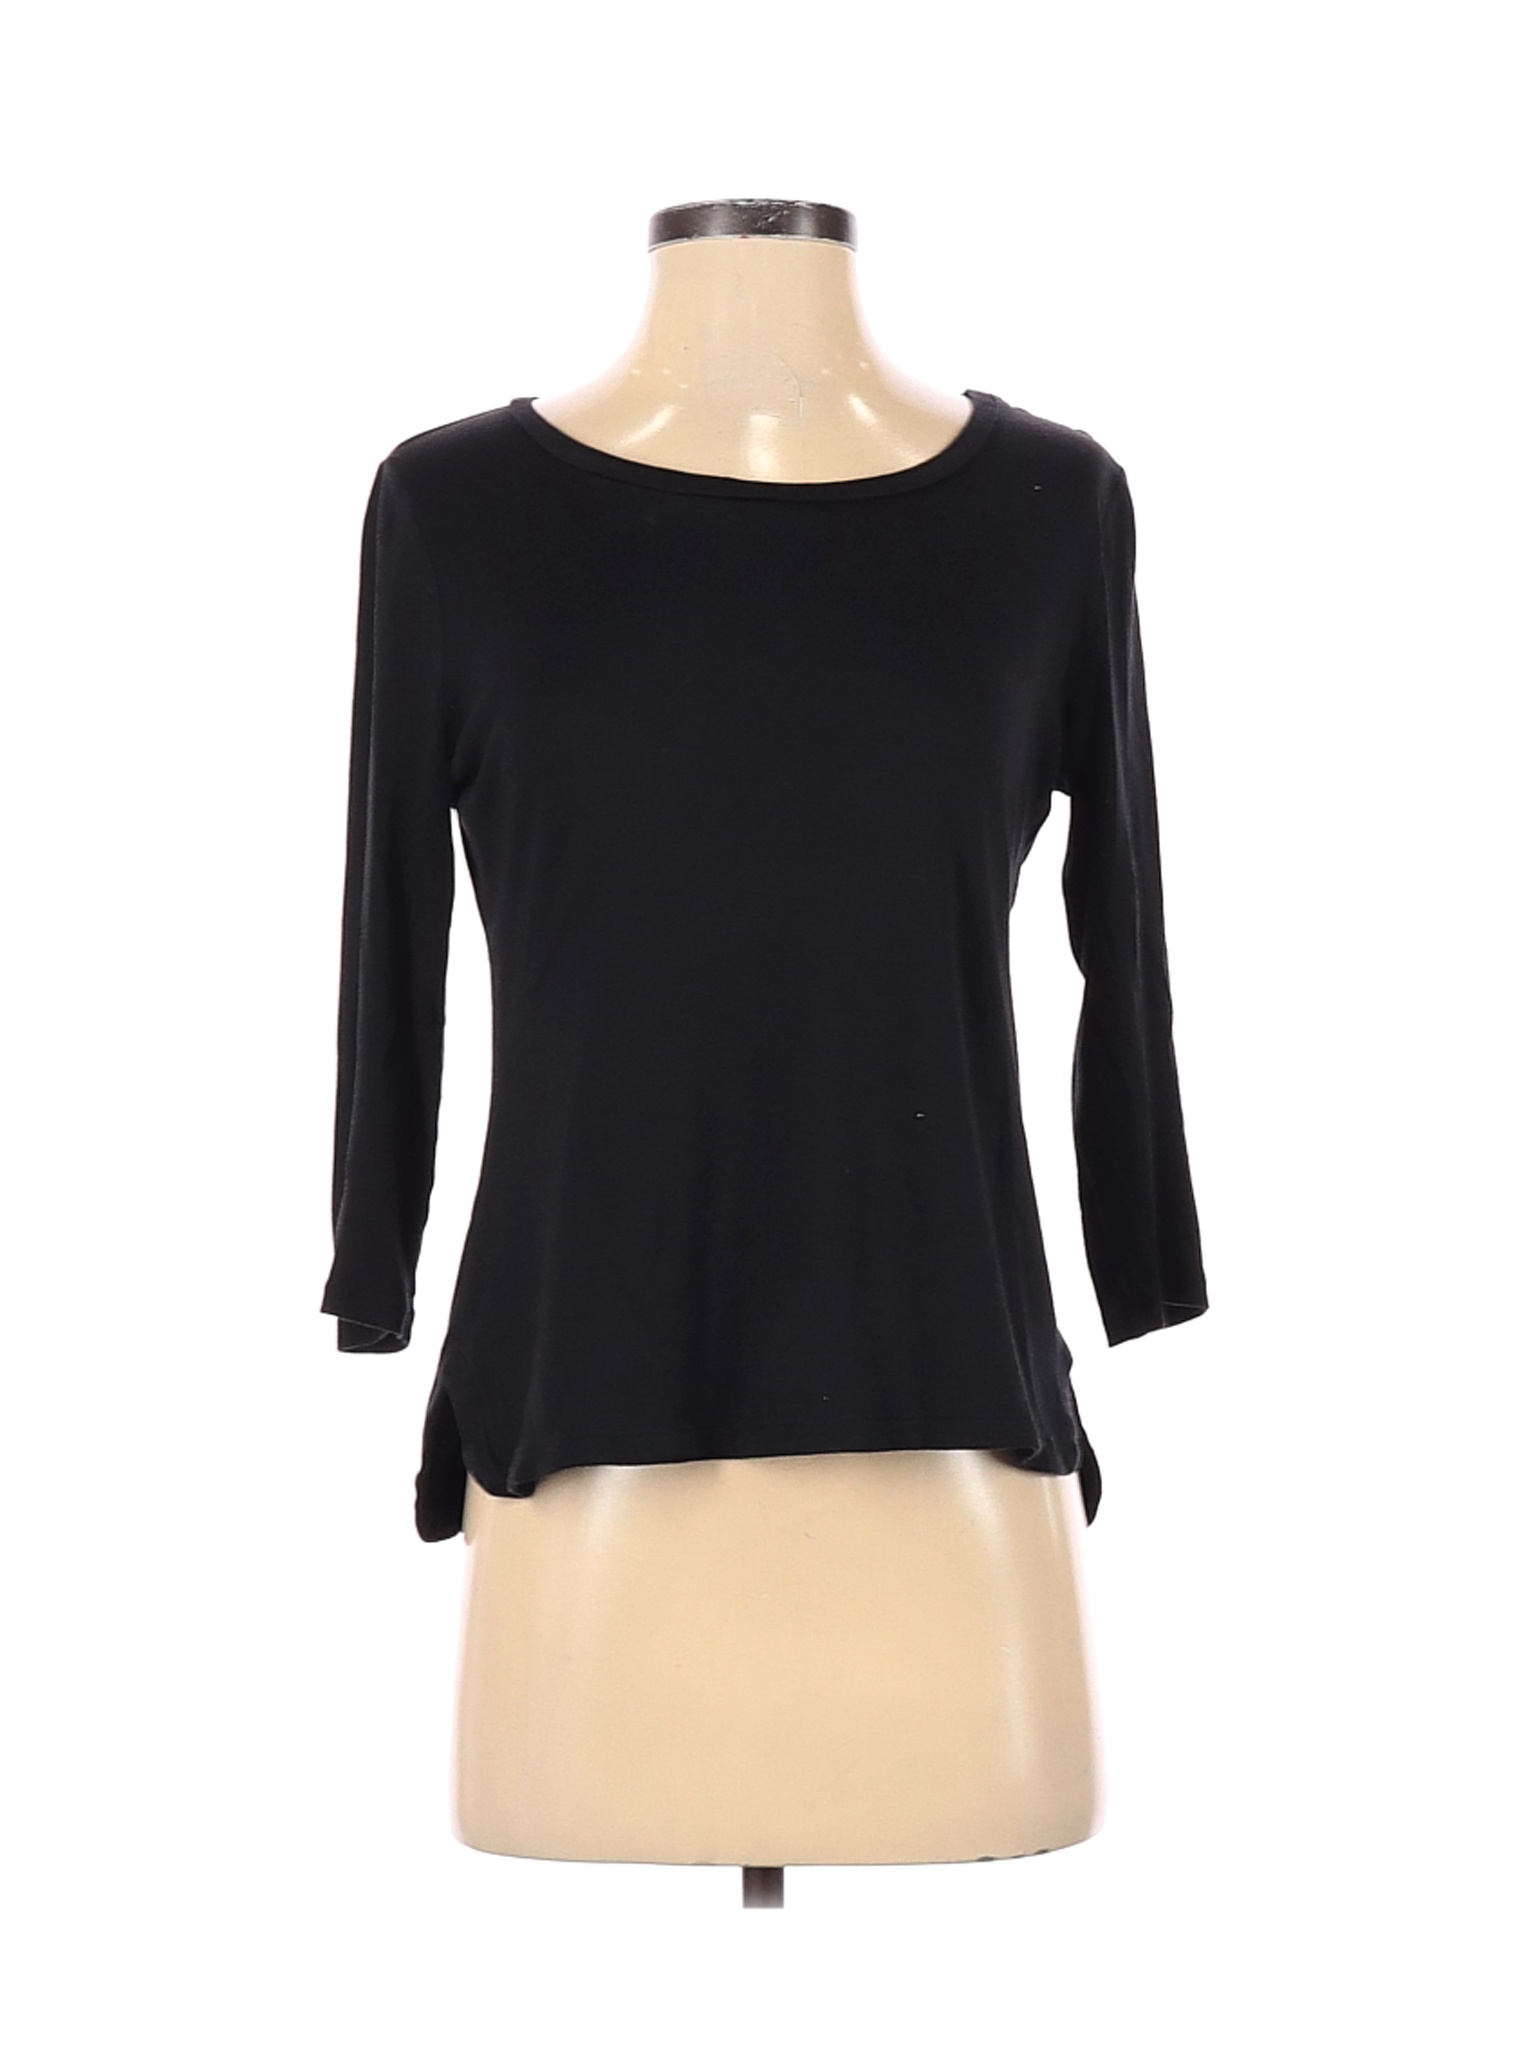 Talbots Women Black 3/4 Sleeve Top S Petites | eBay